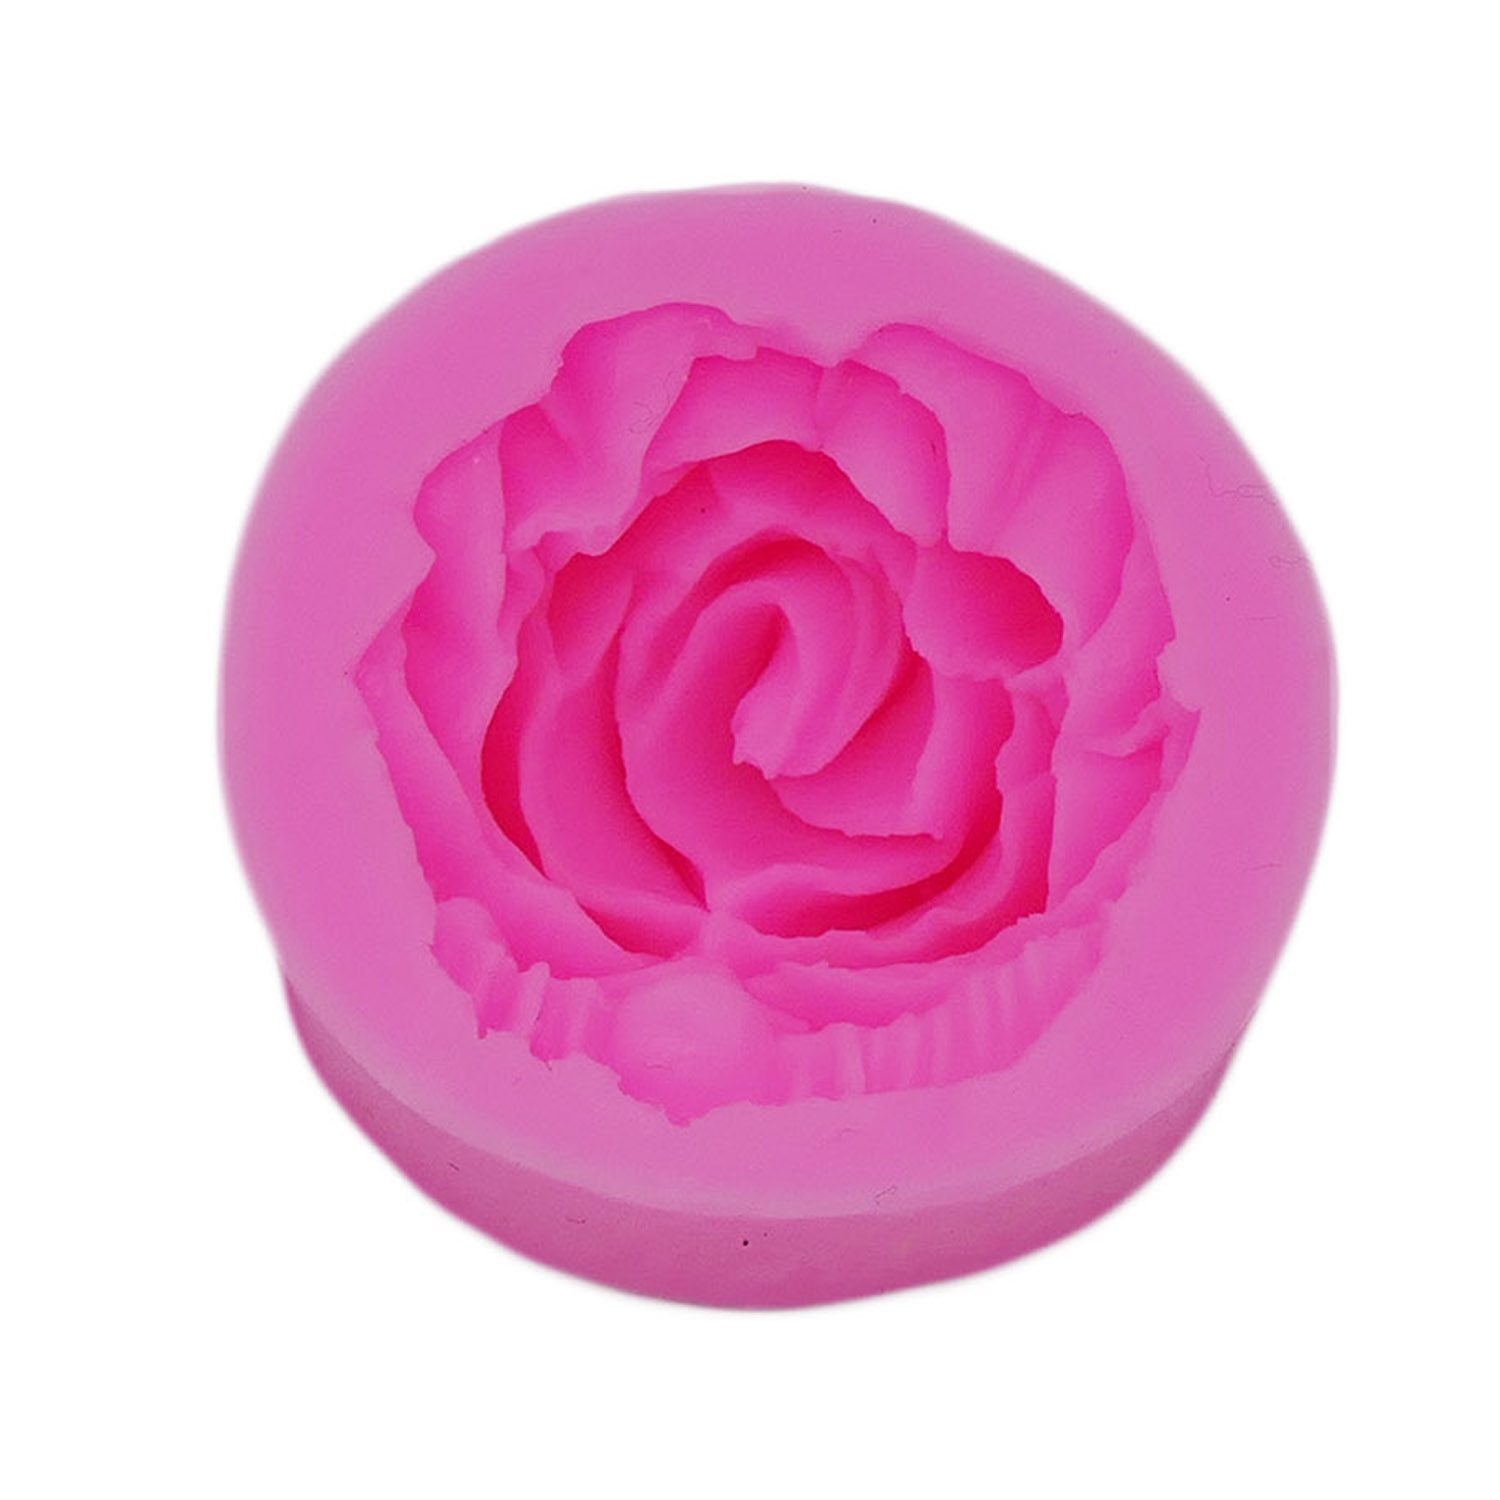 Fondantform aus Silikon, 1x Rose, klein, rosa, ca. 4,2x4,2x2,2 cm